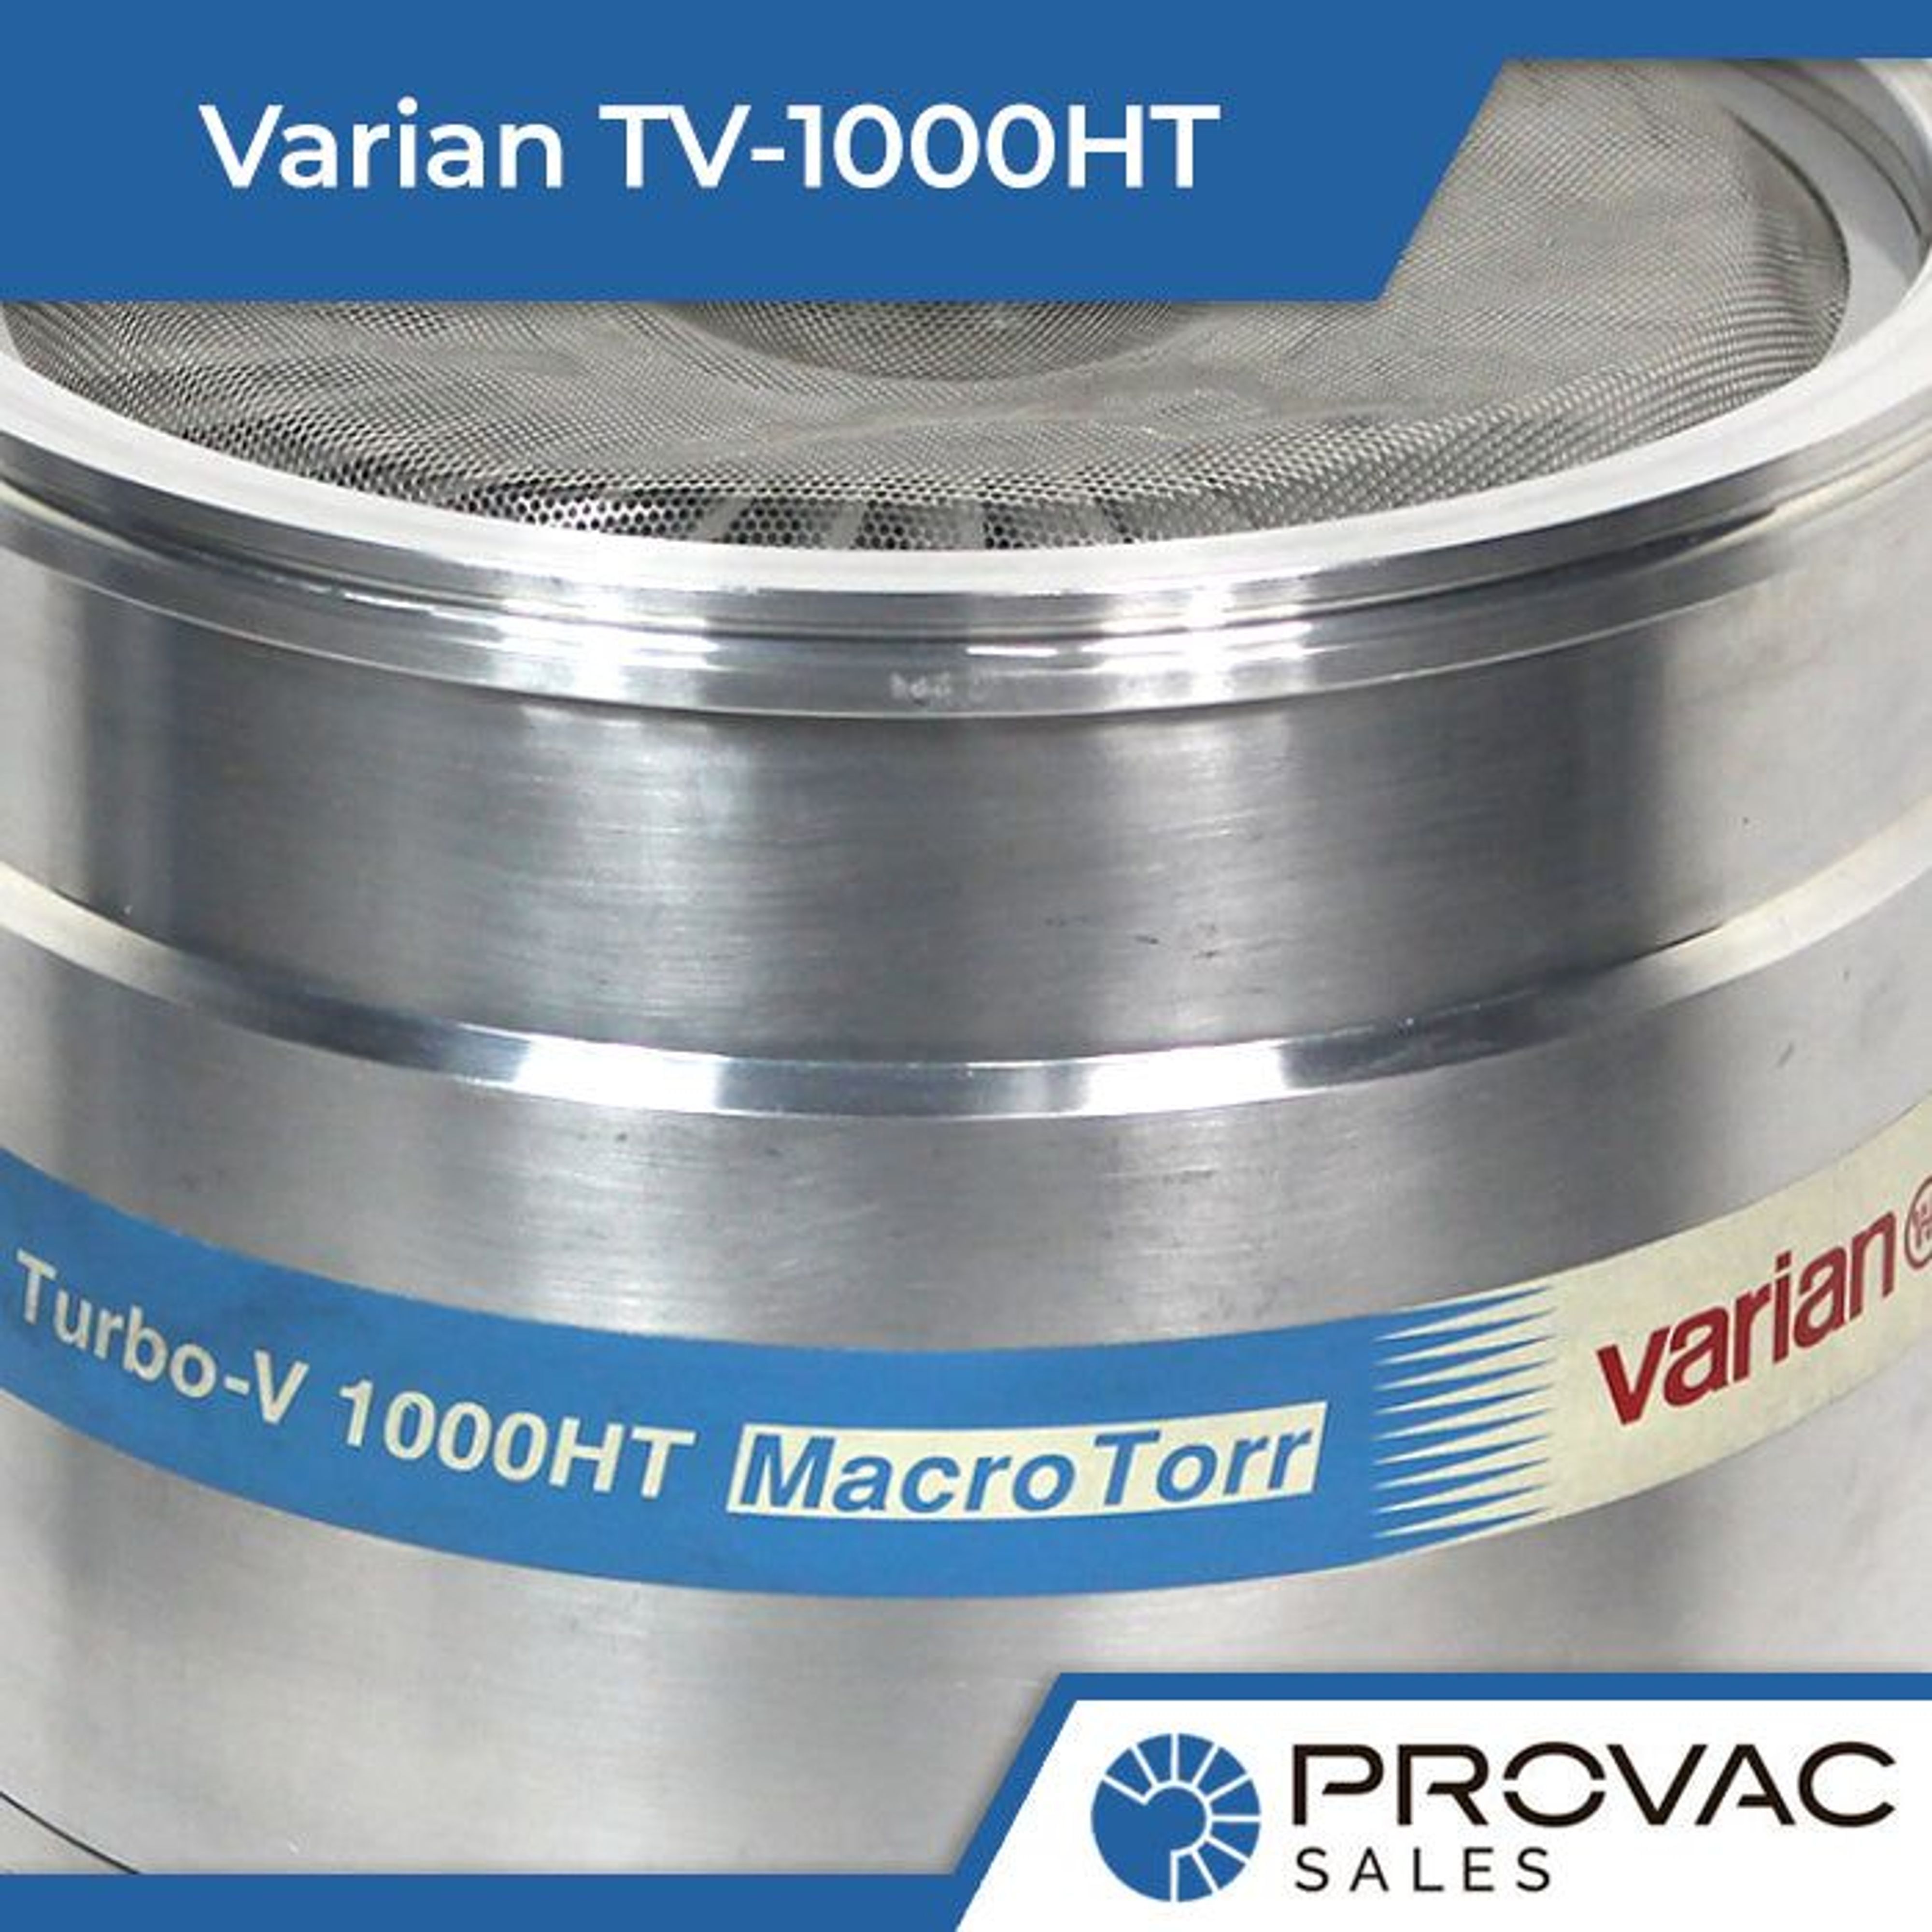 Product Spotlight: Varian TV-1000HT Turbo Pump Background